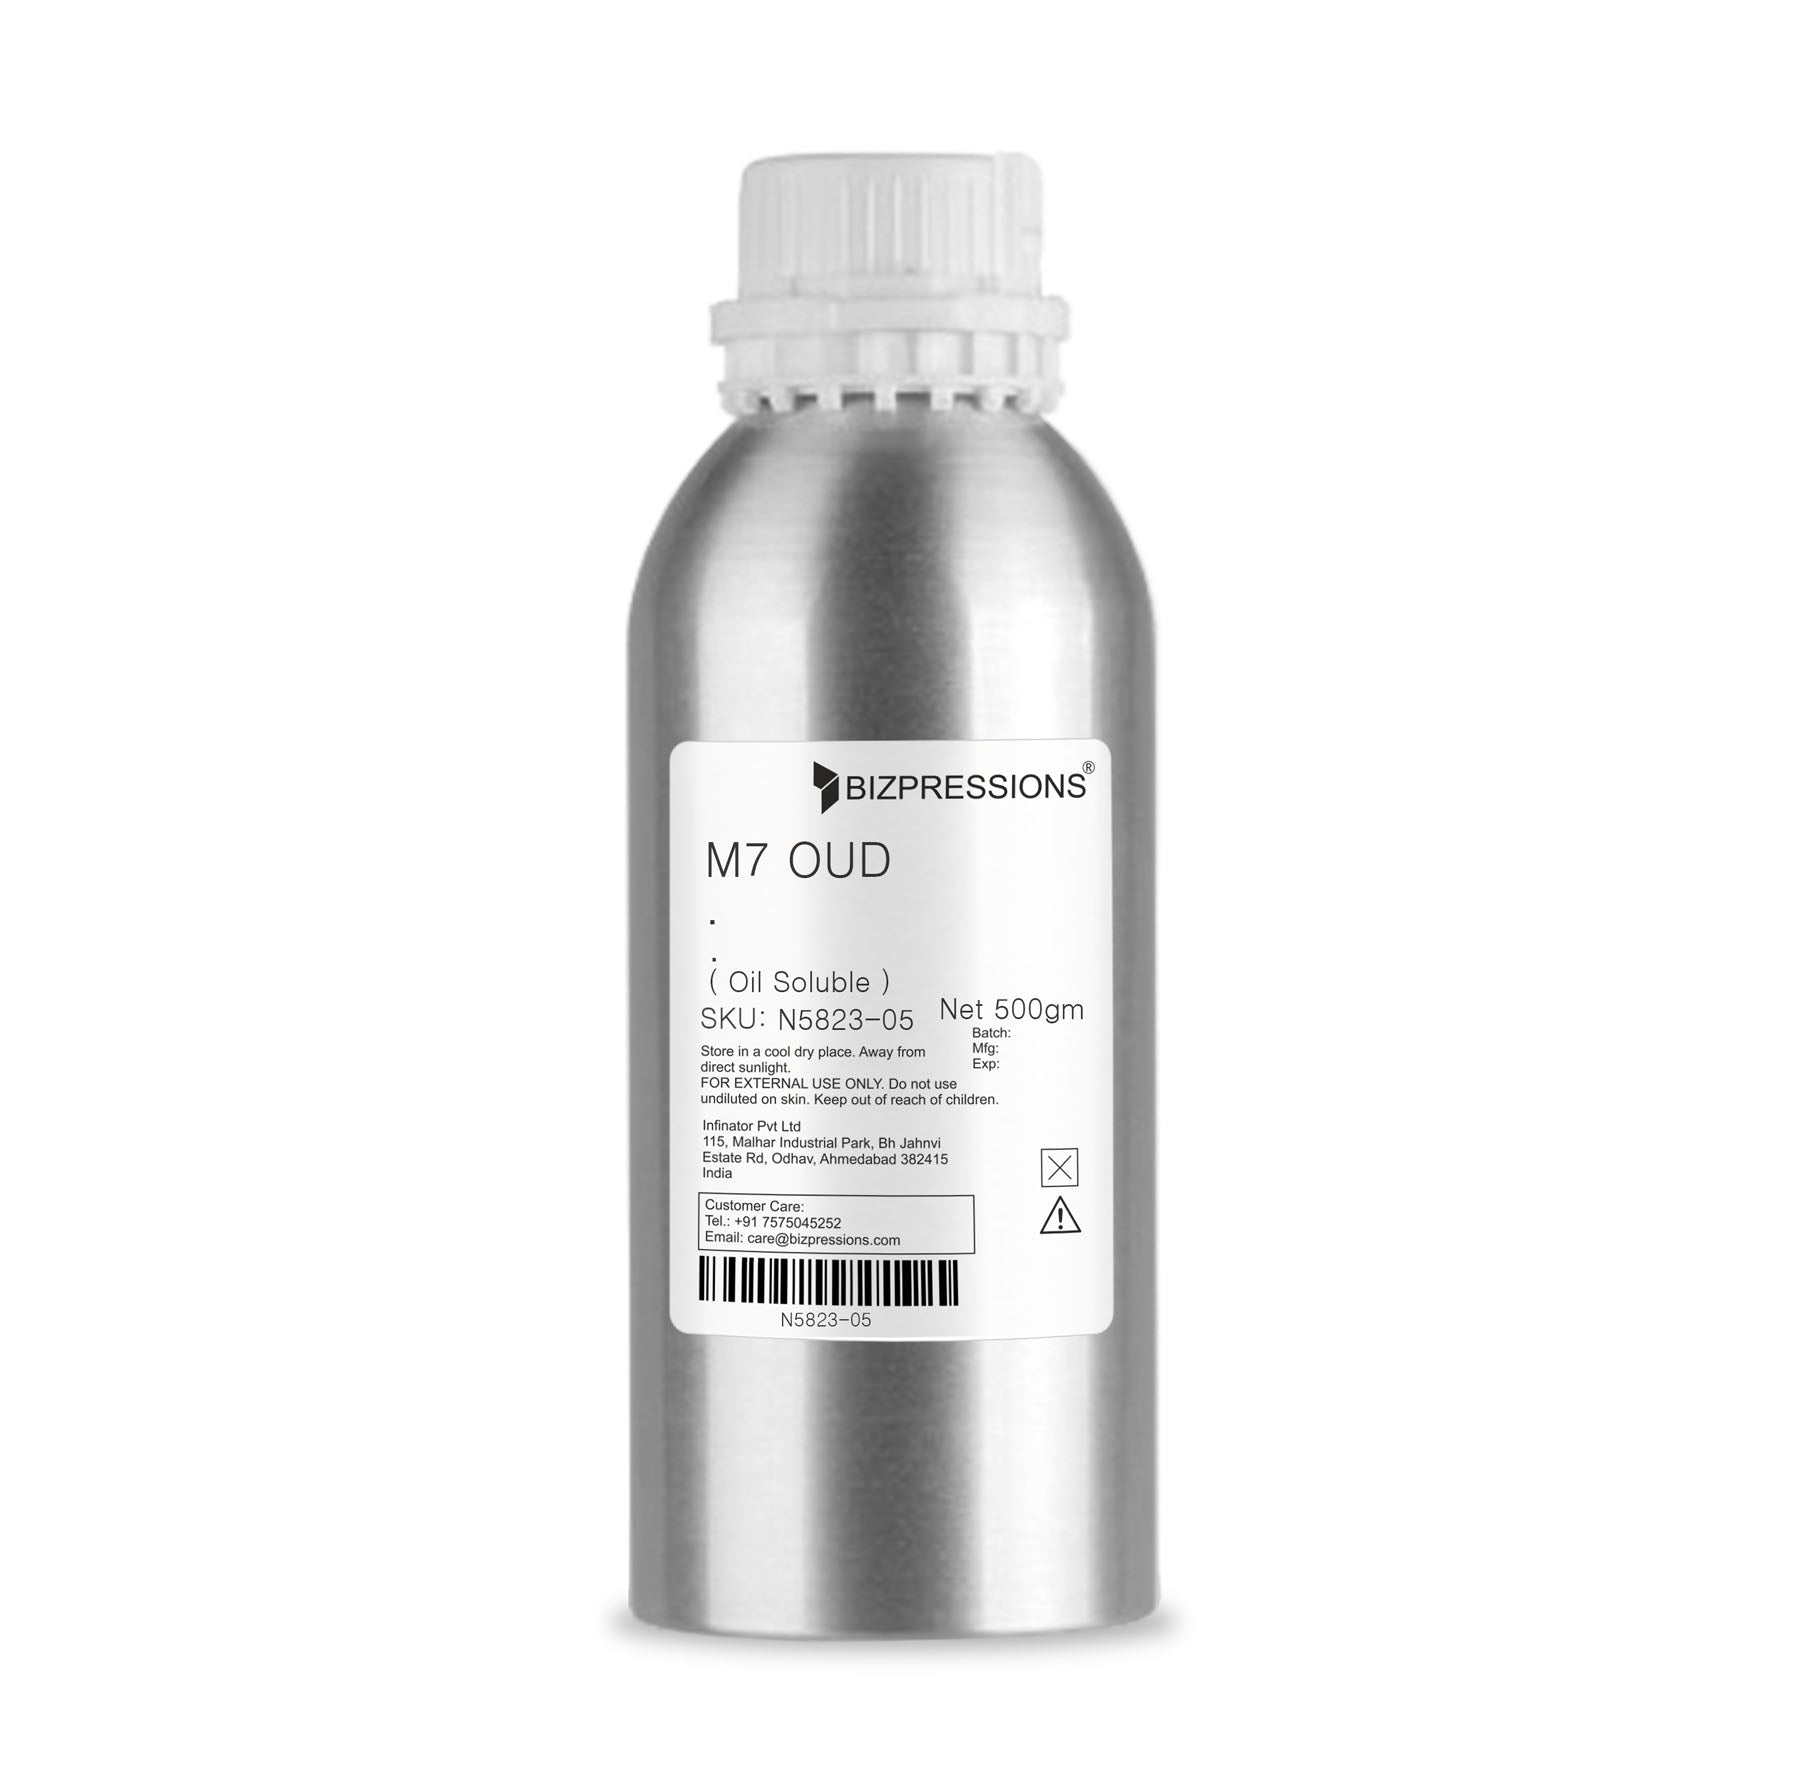 M7 OUD - Fragrance ( Oil Soluble ) - 500 gm